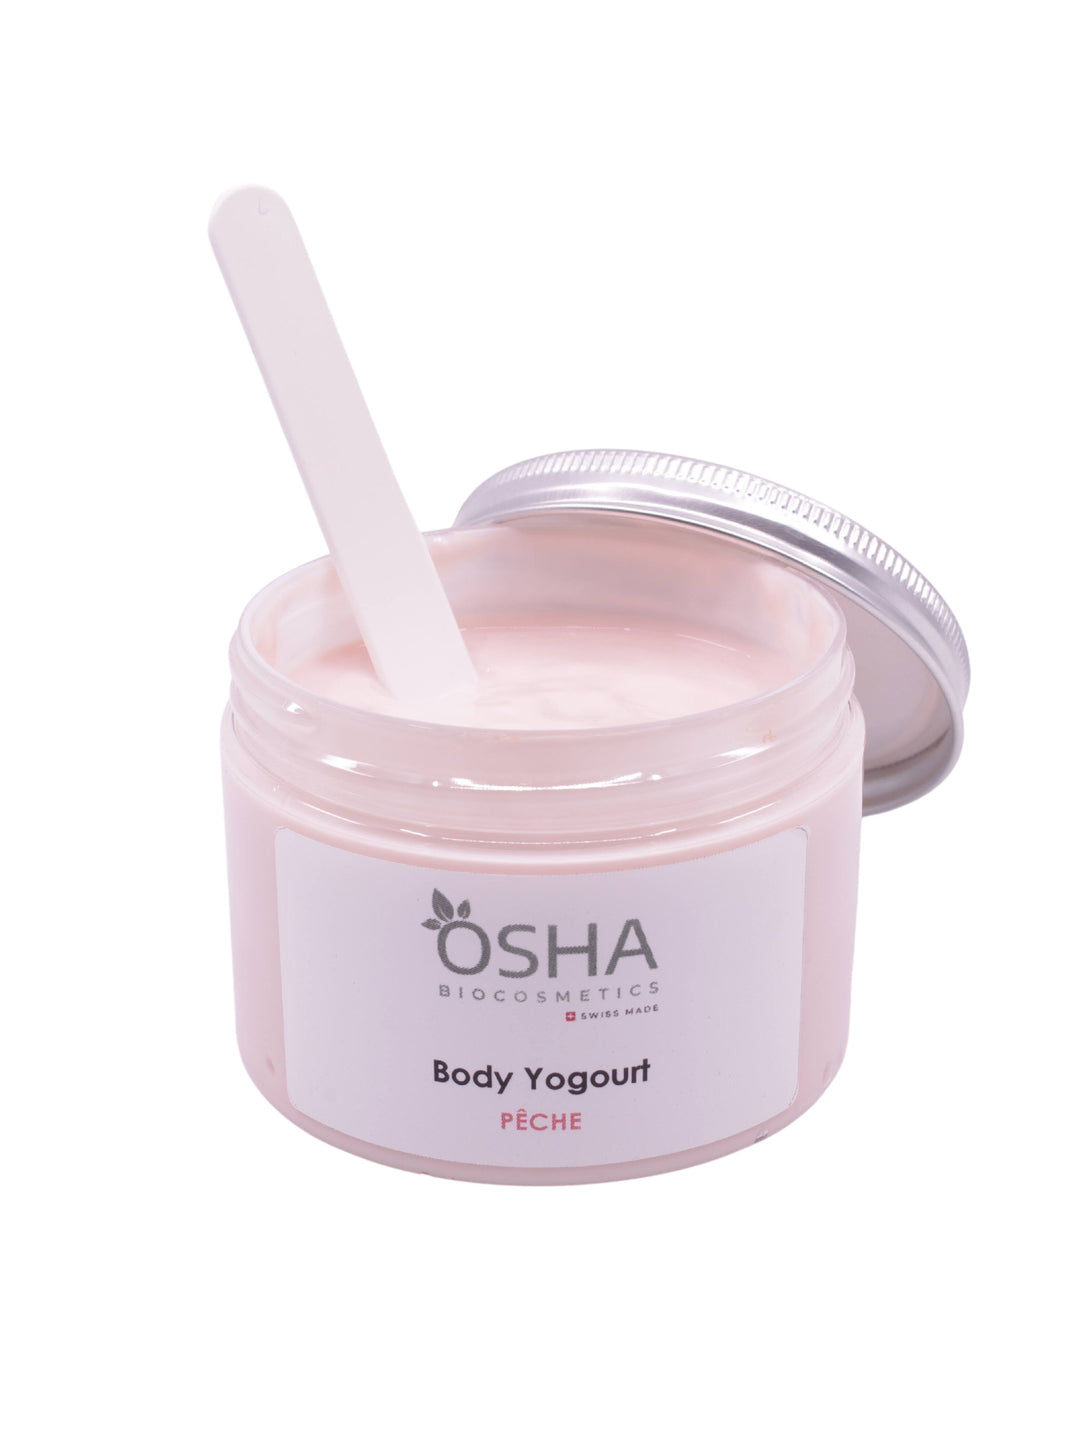 Body Yogurt Pêche - OSHA Biocosmetics